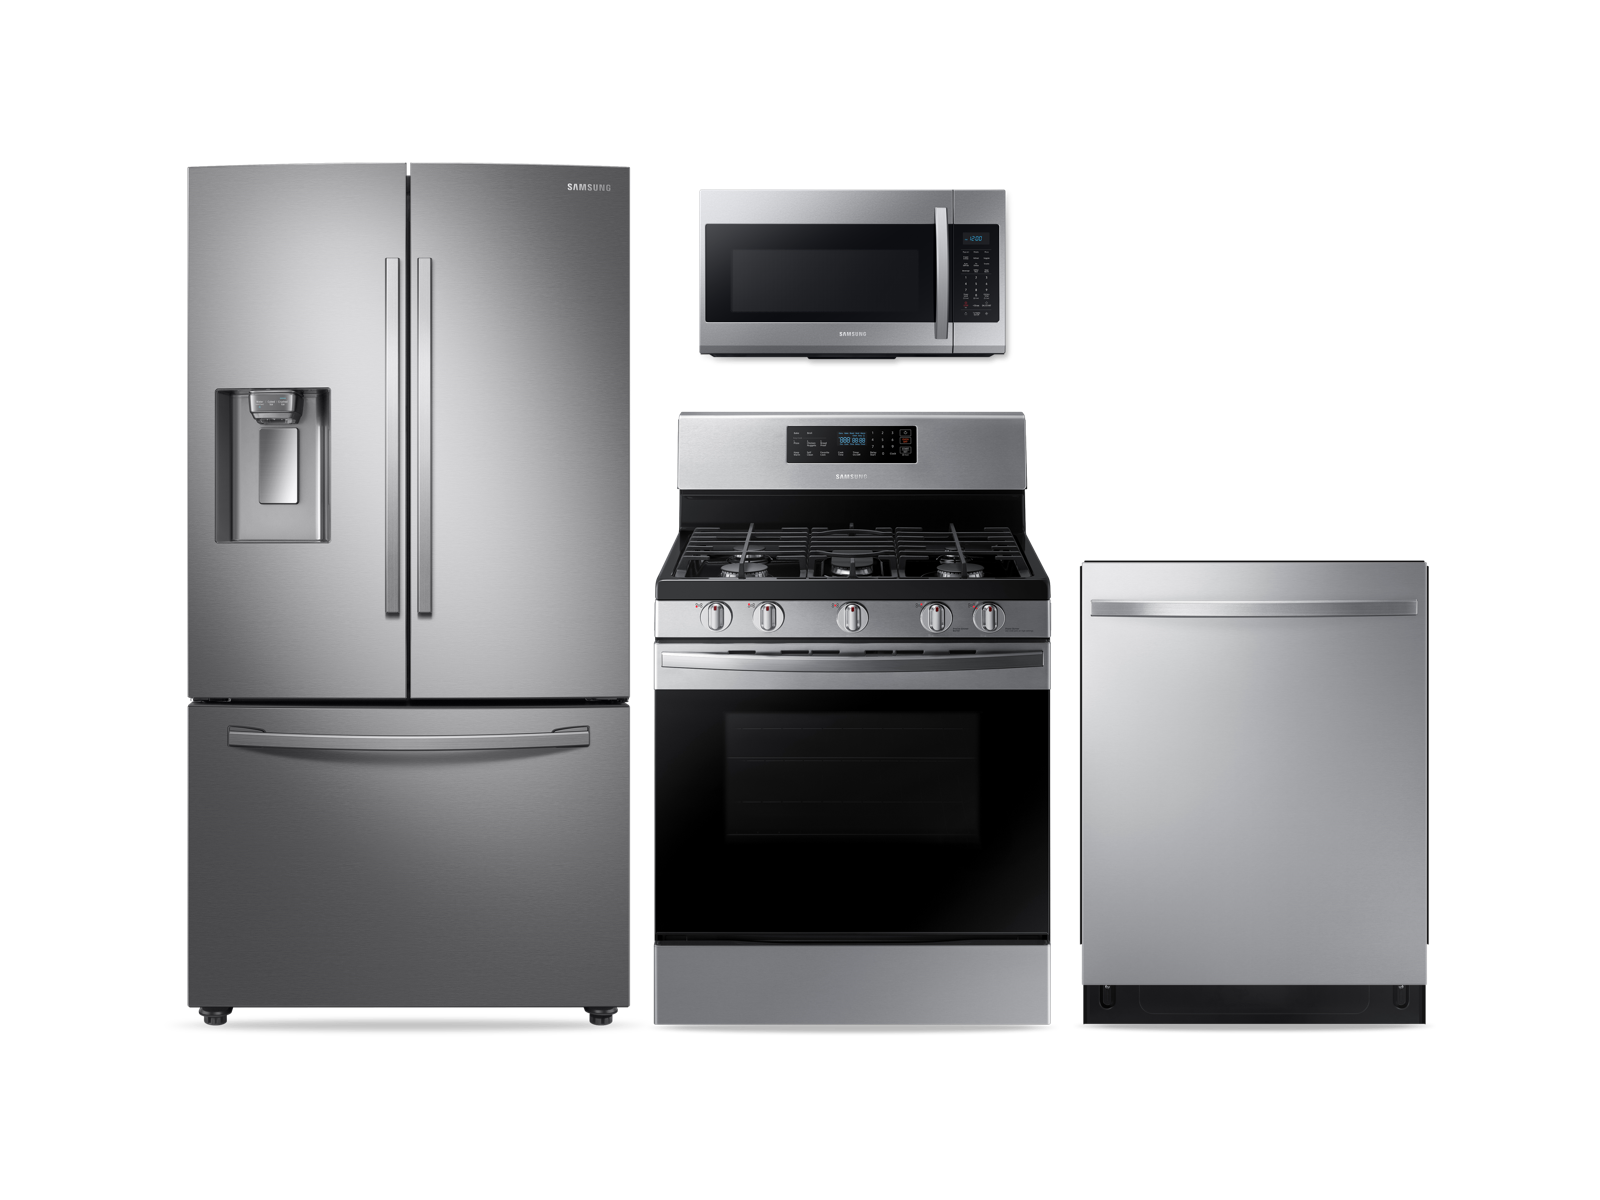 Photos - Fridge Samsung Large Capacity 3-door Refrigerator + Gas Range + StormWash Dishwas 